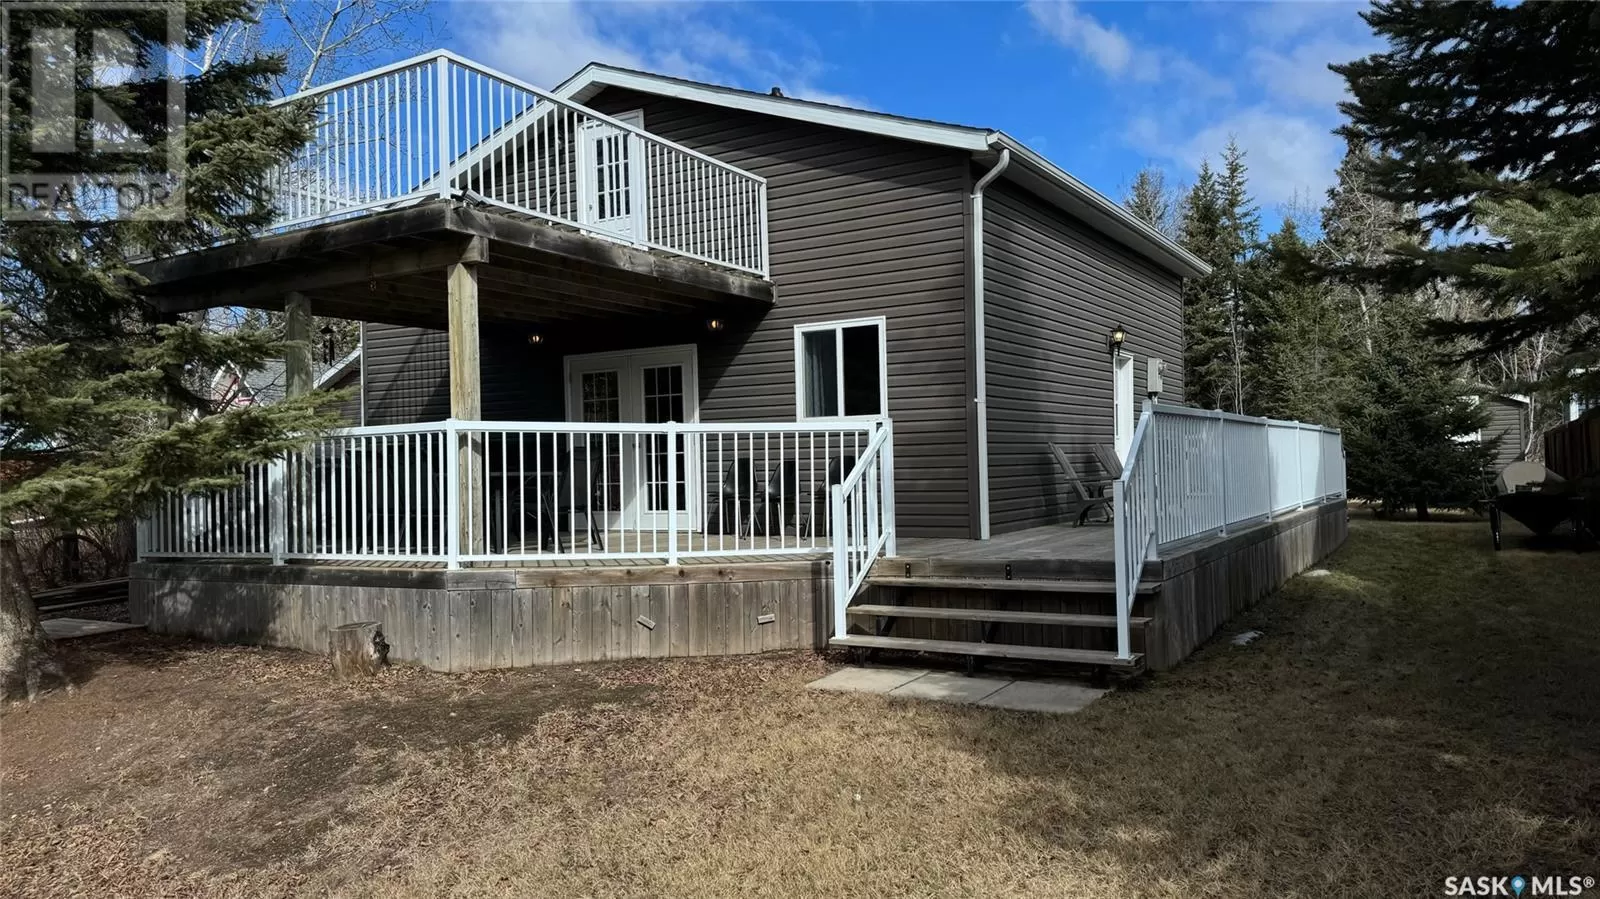 House for rent: Lot 4 Block 4 Sturgeon Lake West, Sturgeon Lake, Saskatchewan S0J 2E0